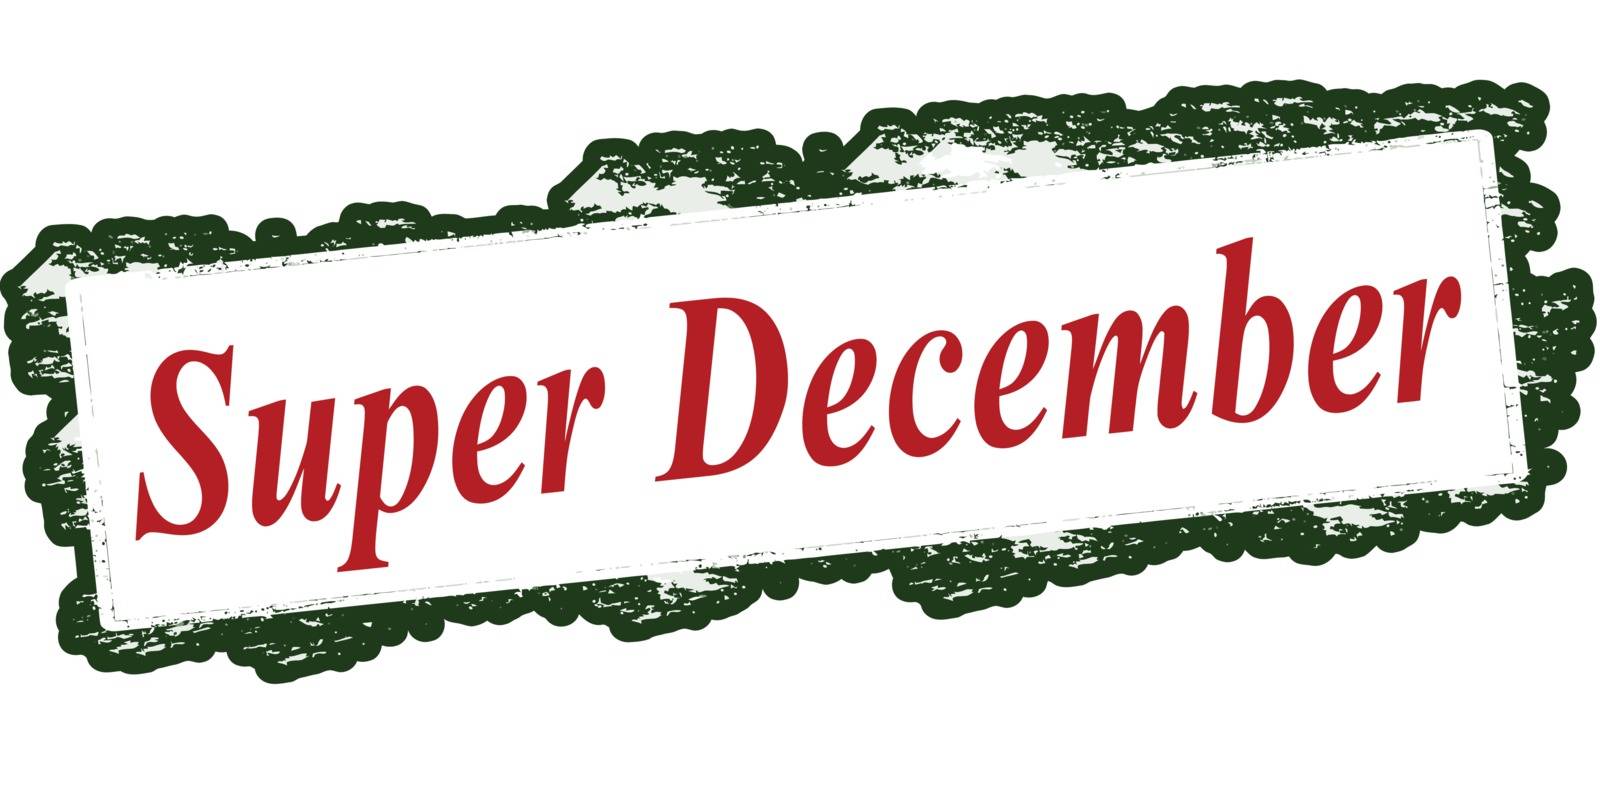 Super December by carmenbobo